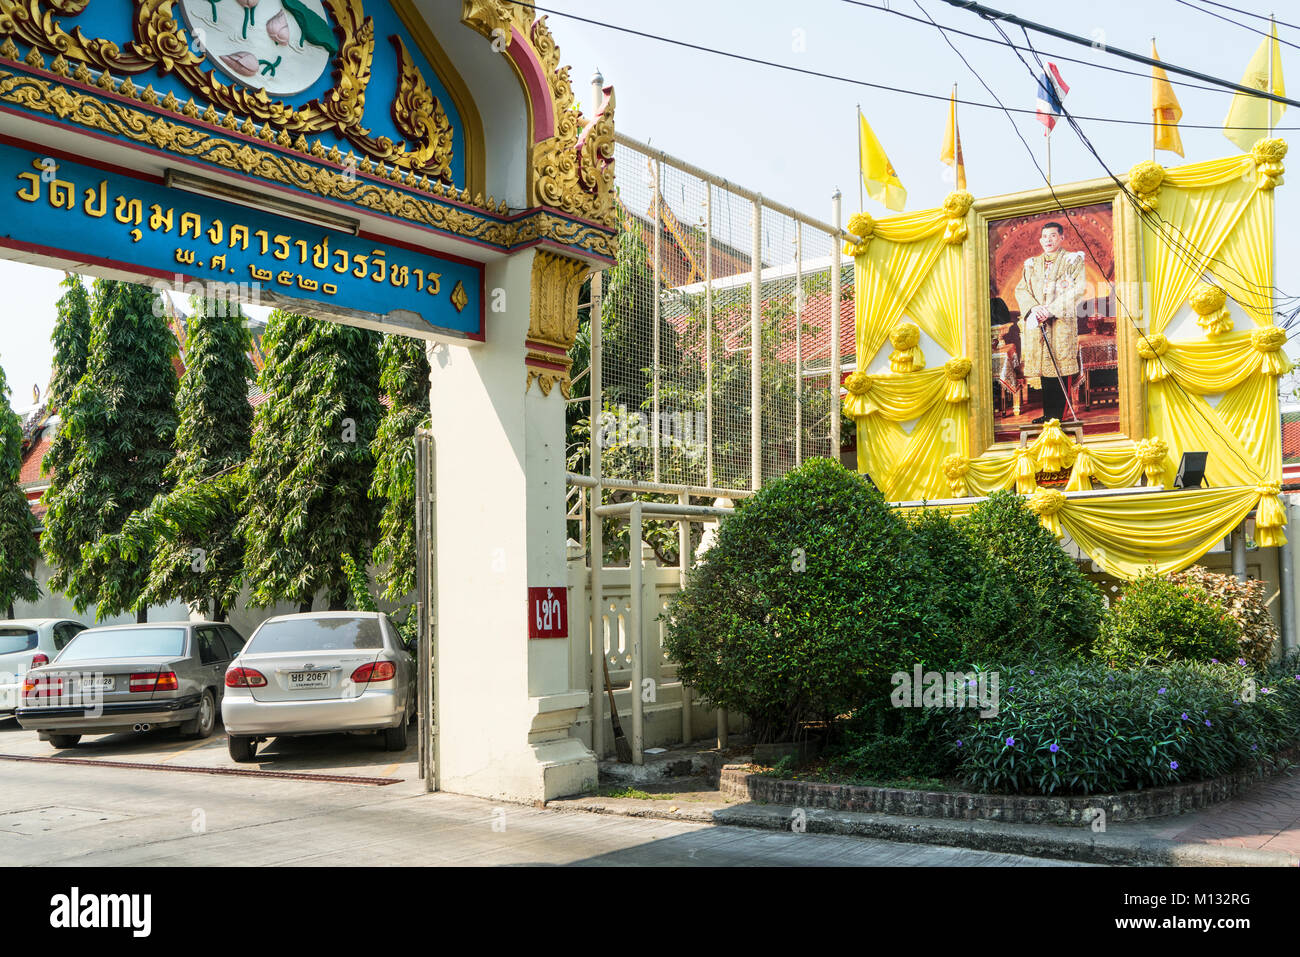 Bangkok - Wat Patumkongka Rachaworawlham Soi Foto Stock